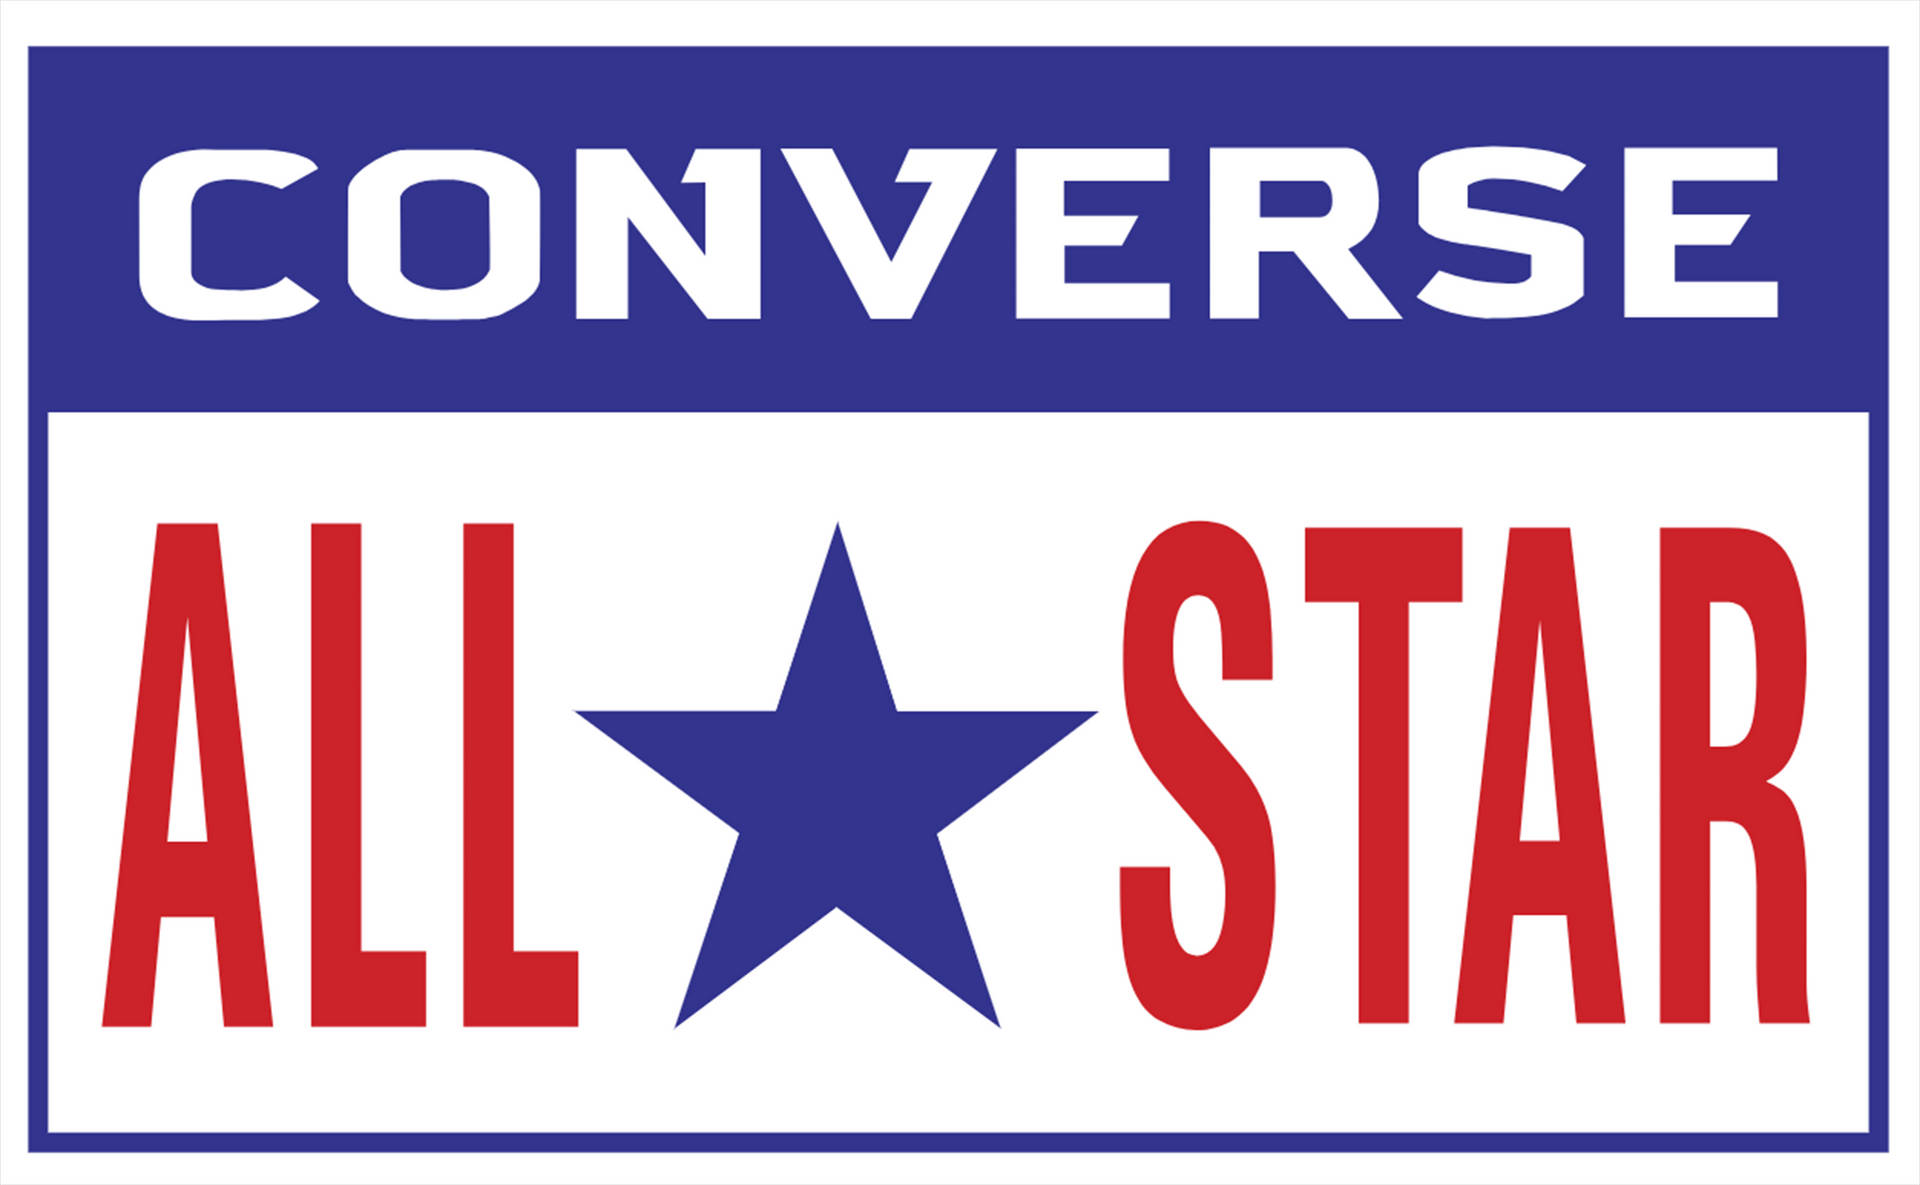 Allesstar Converse Logo. Wallpaper